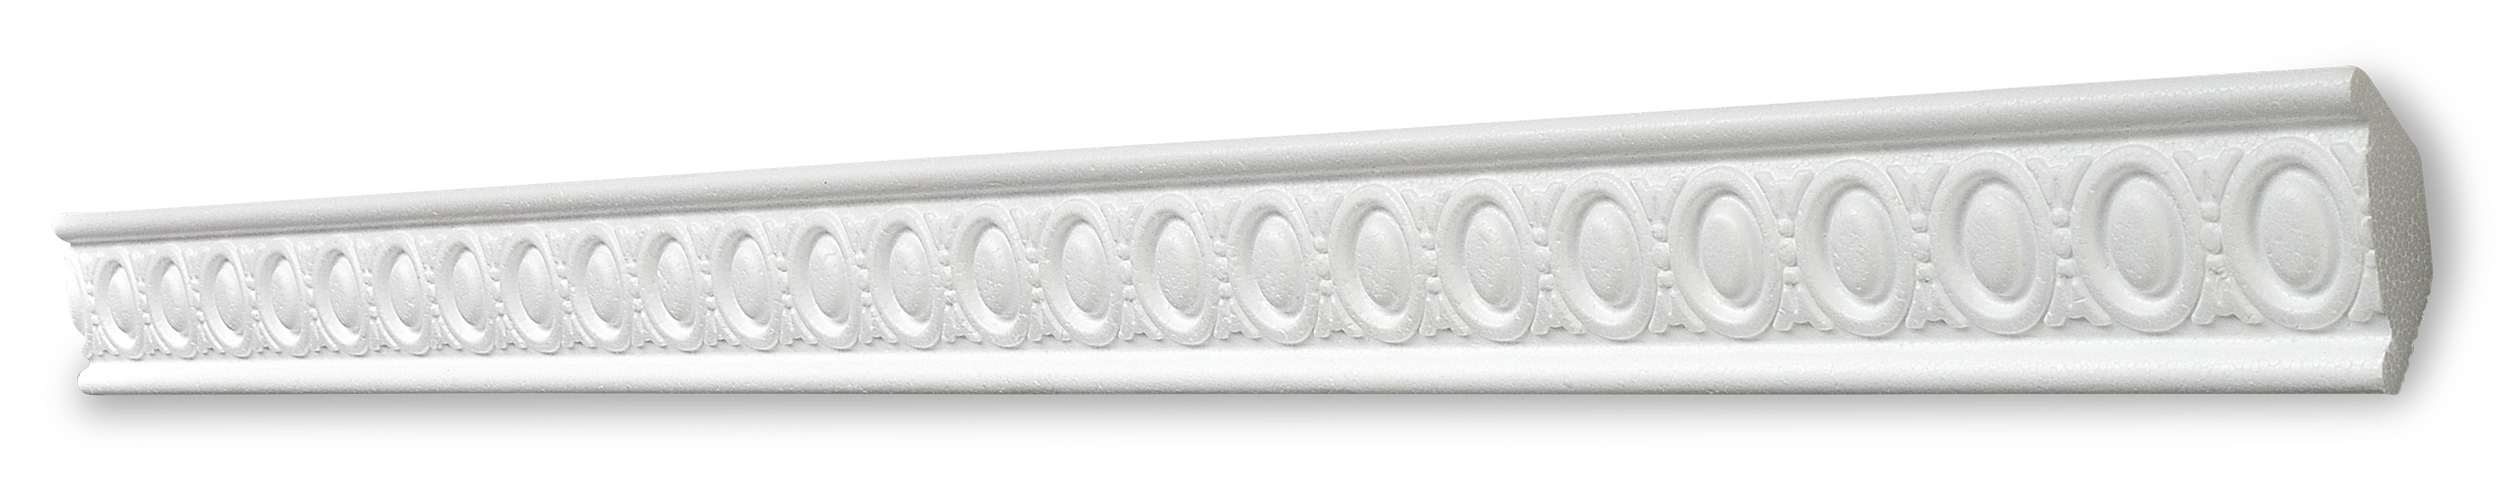 Decosa Zierprofil G23 (Martine), weiß, 31 x 31 mm, Länge: 2 m